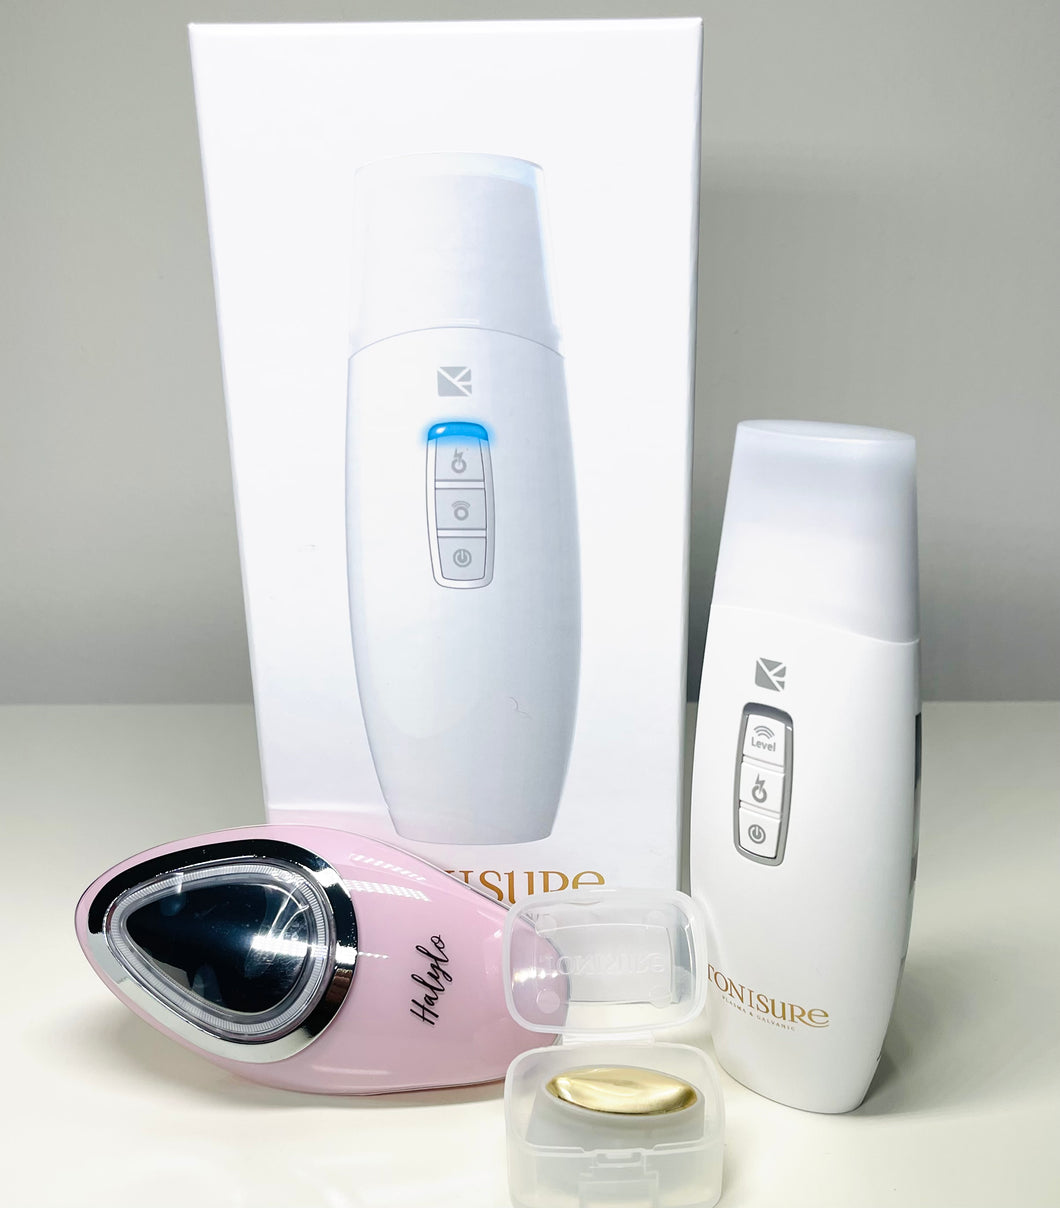 Tonisure Plasma & Galvanic 2 in 1 portable skin care device with free Glo Brush